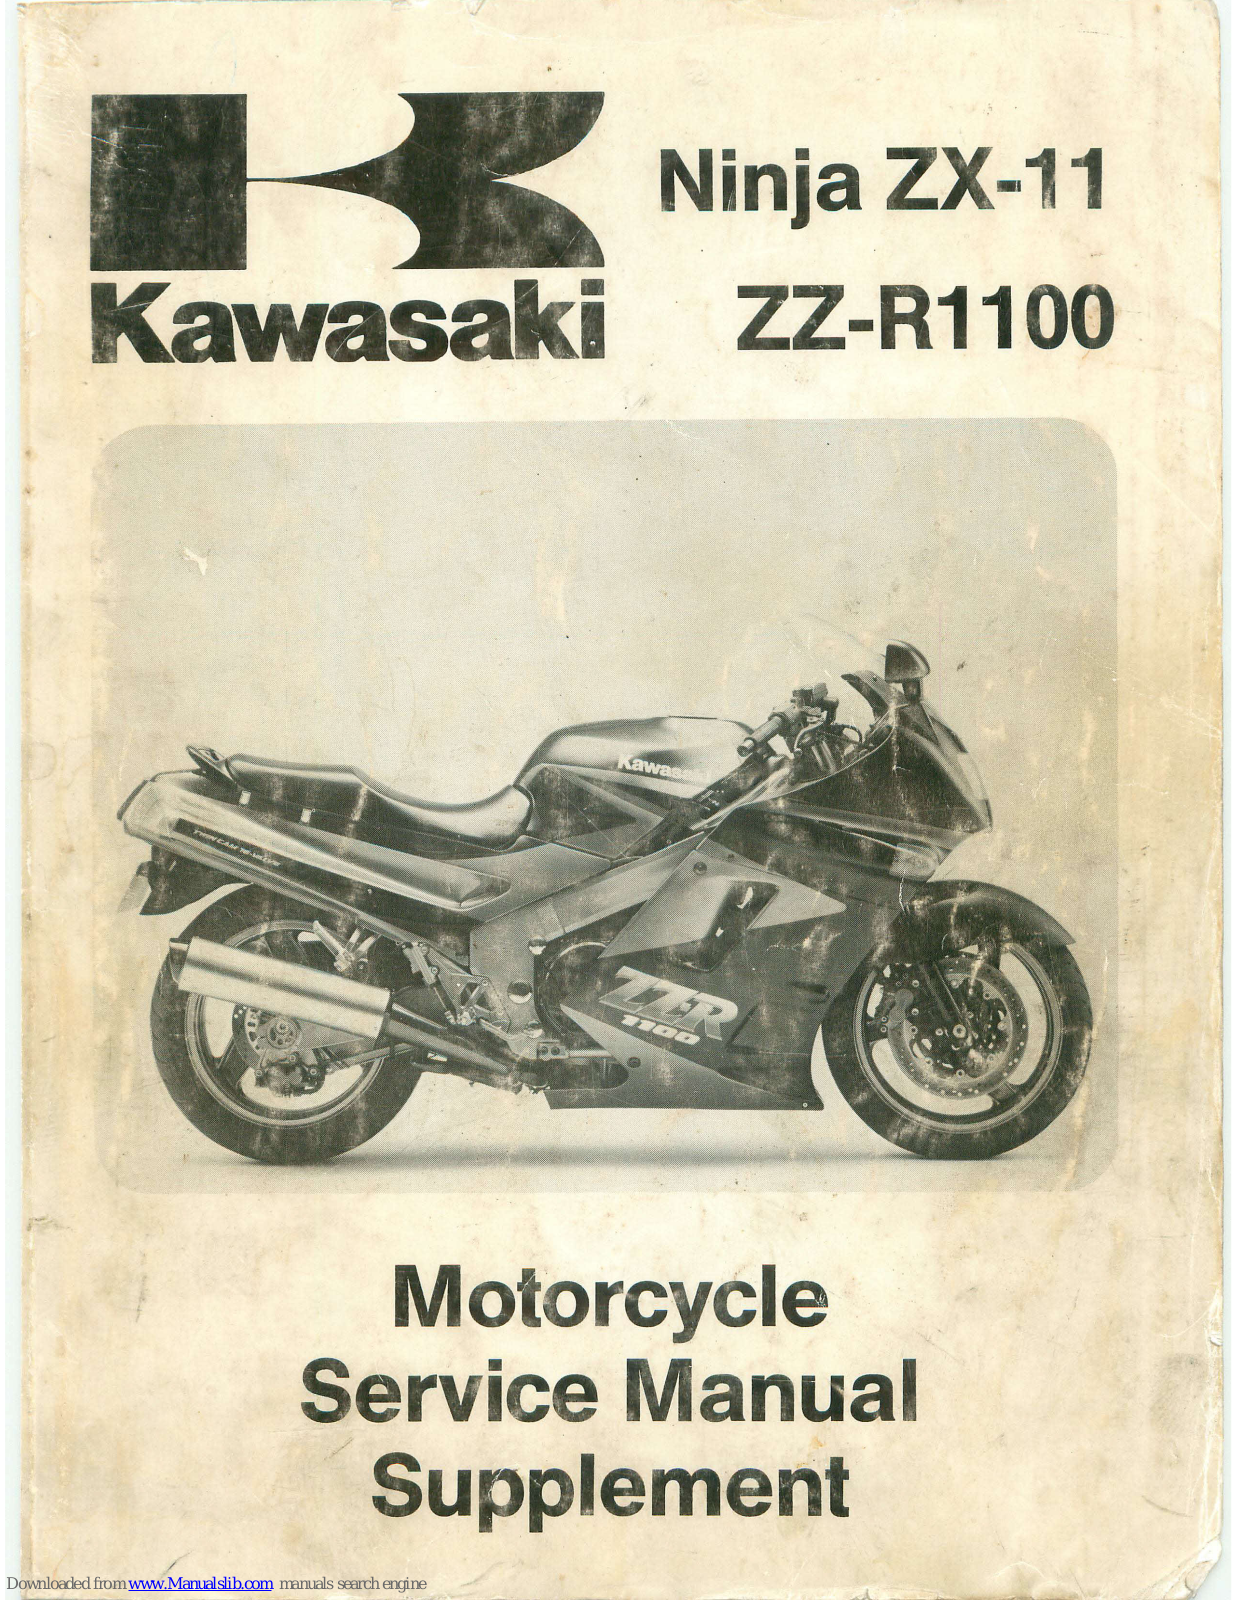 Kawasaki Ninja ZX-11 1990, Ninja ZX-11 1991, ZZ-R1100 1990, ZZ-R1100 1991 Service Manual Supplement